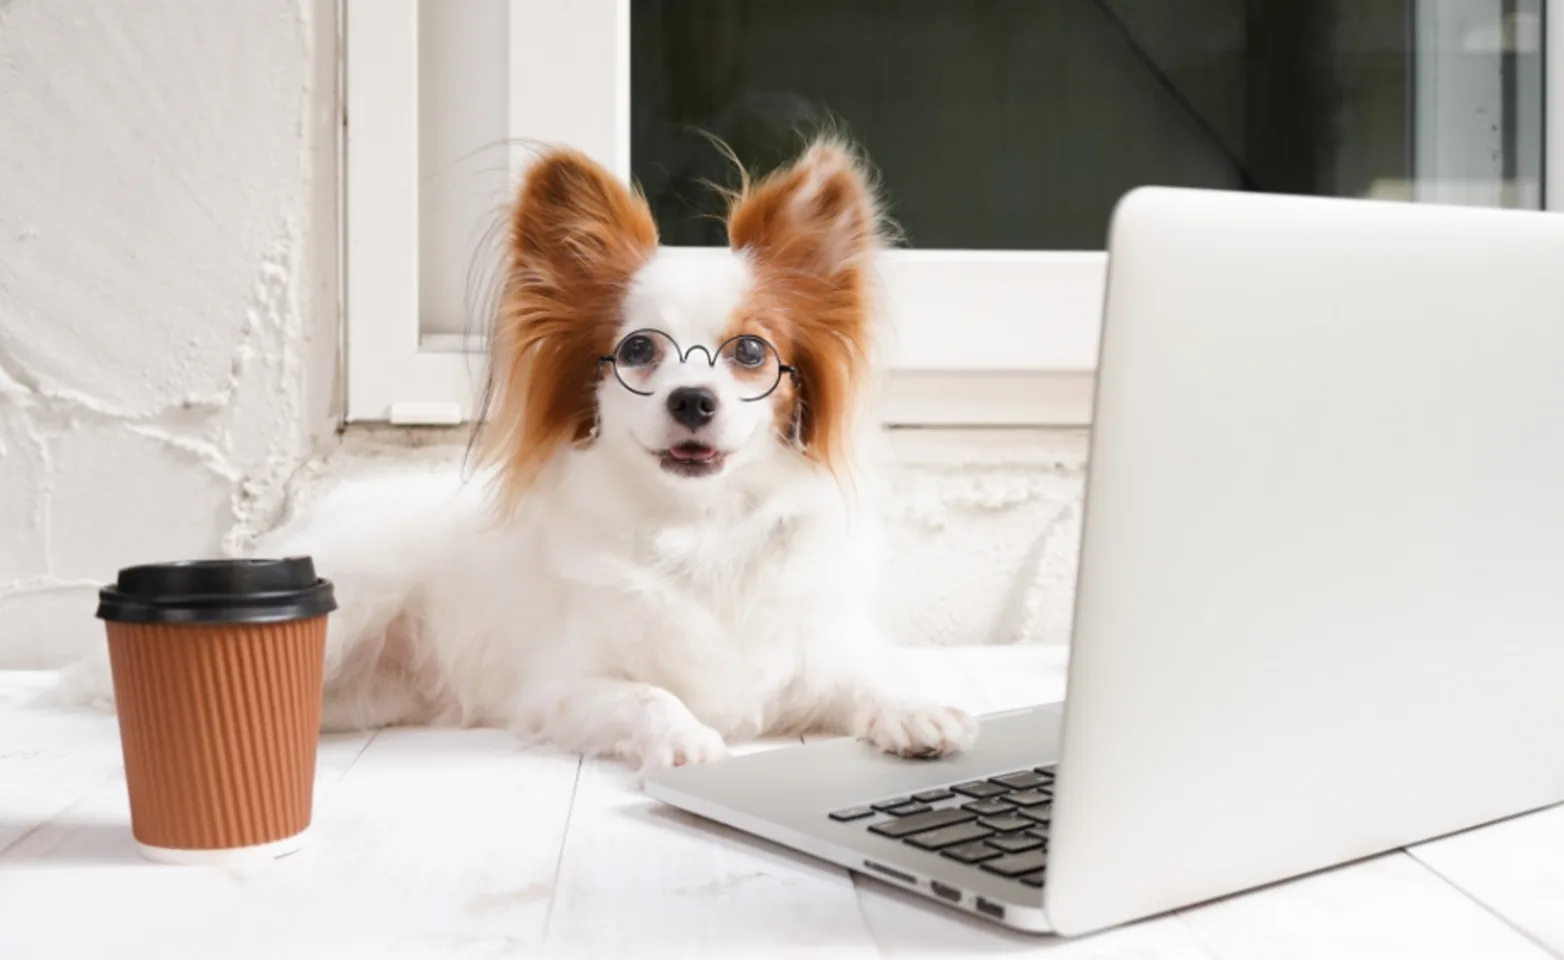 Small Dog Wearing Glasses Using Laptop